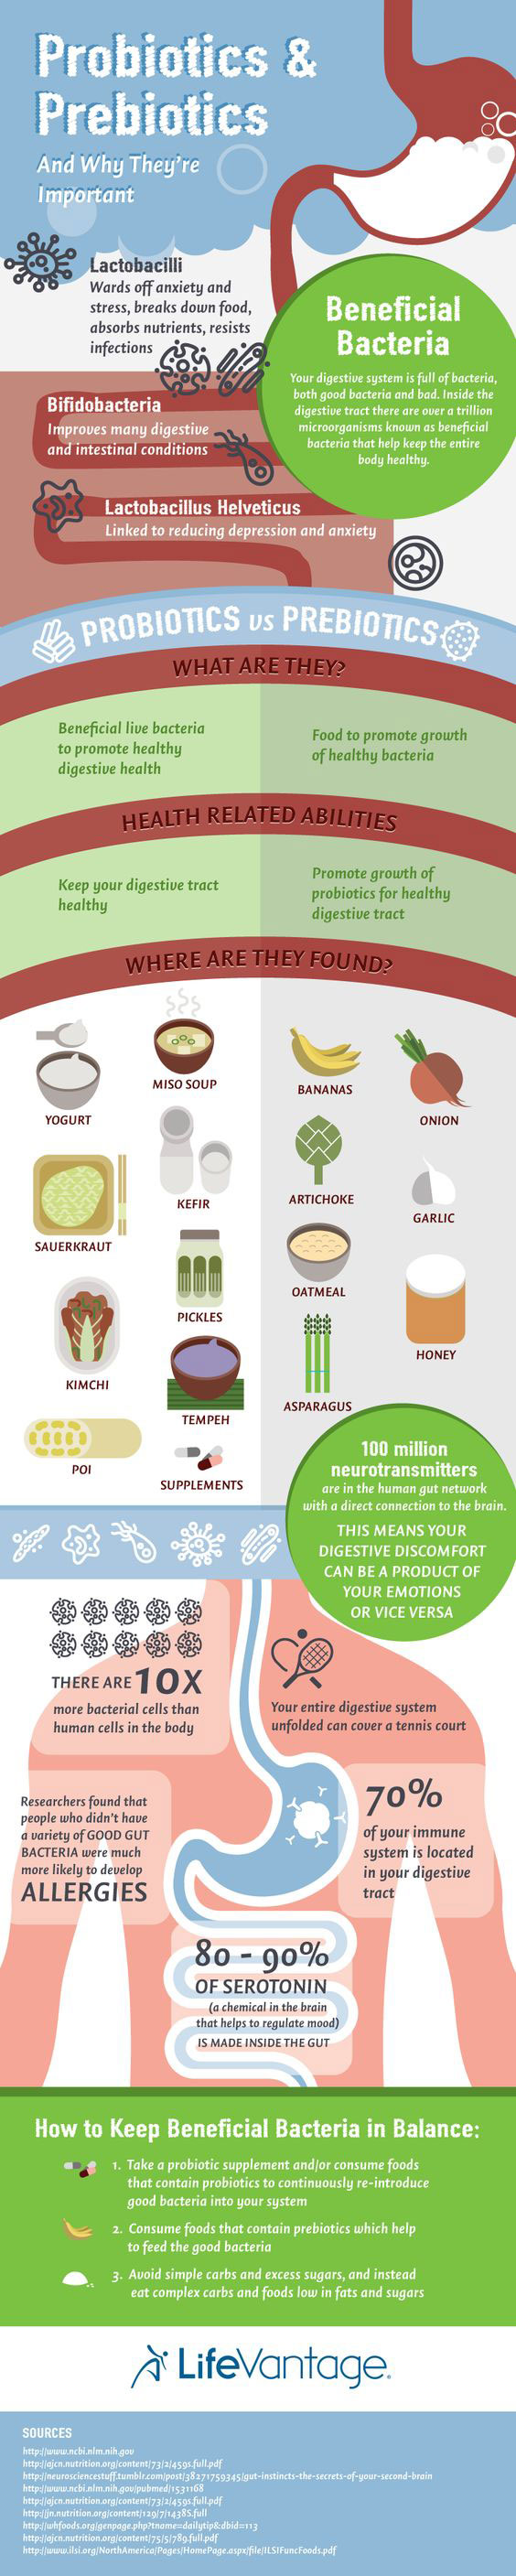 probiotics-prebiotics-infographic